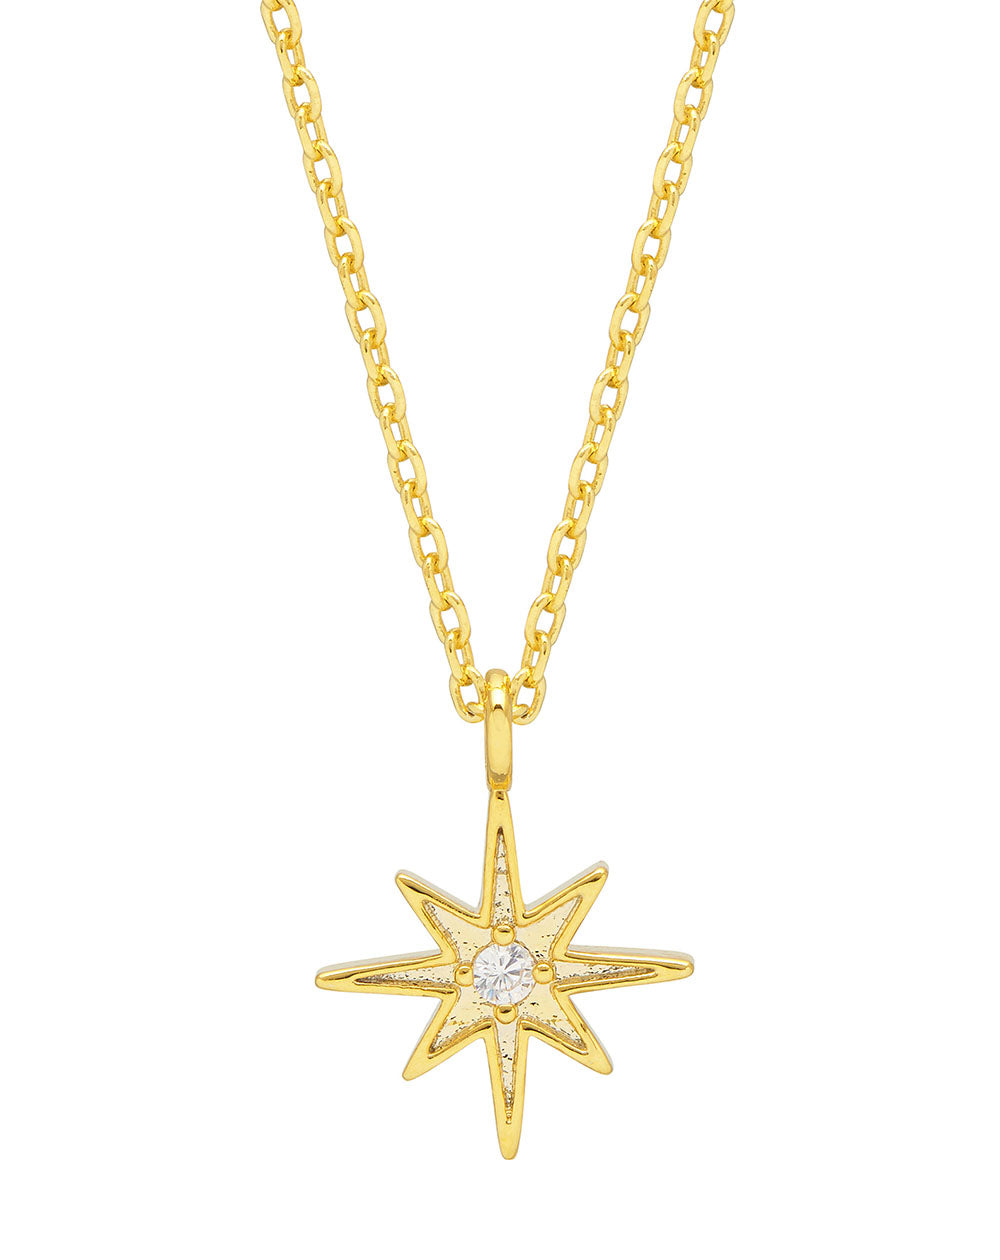 Estella Bartlett - North Star Necklace in Gold